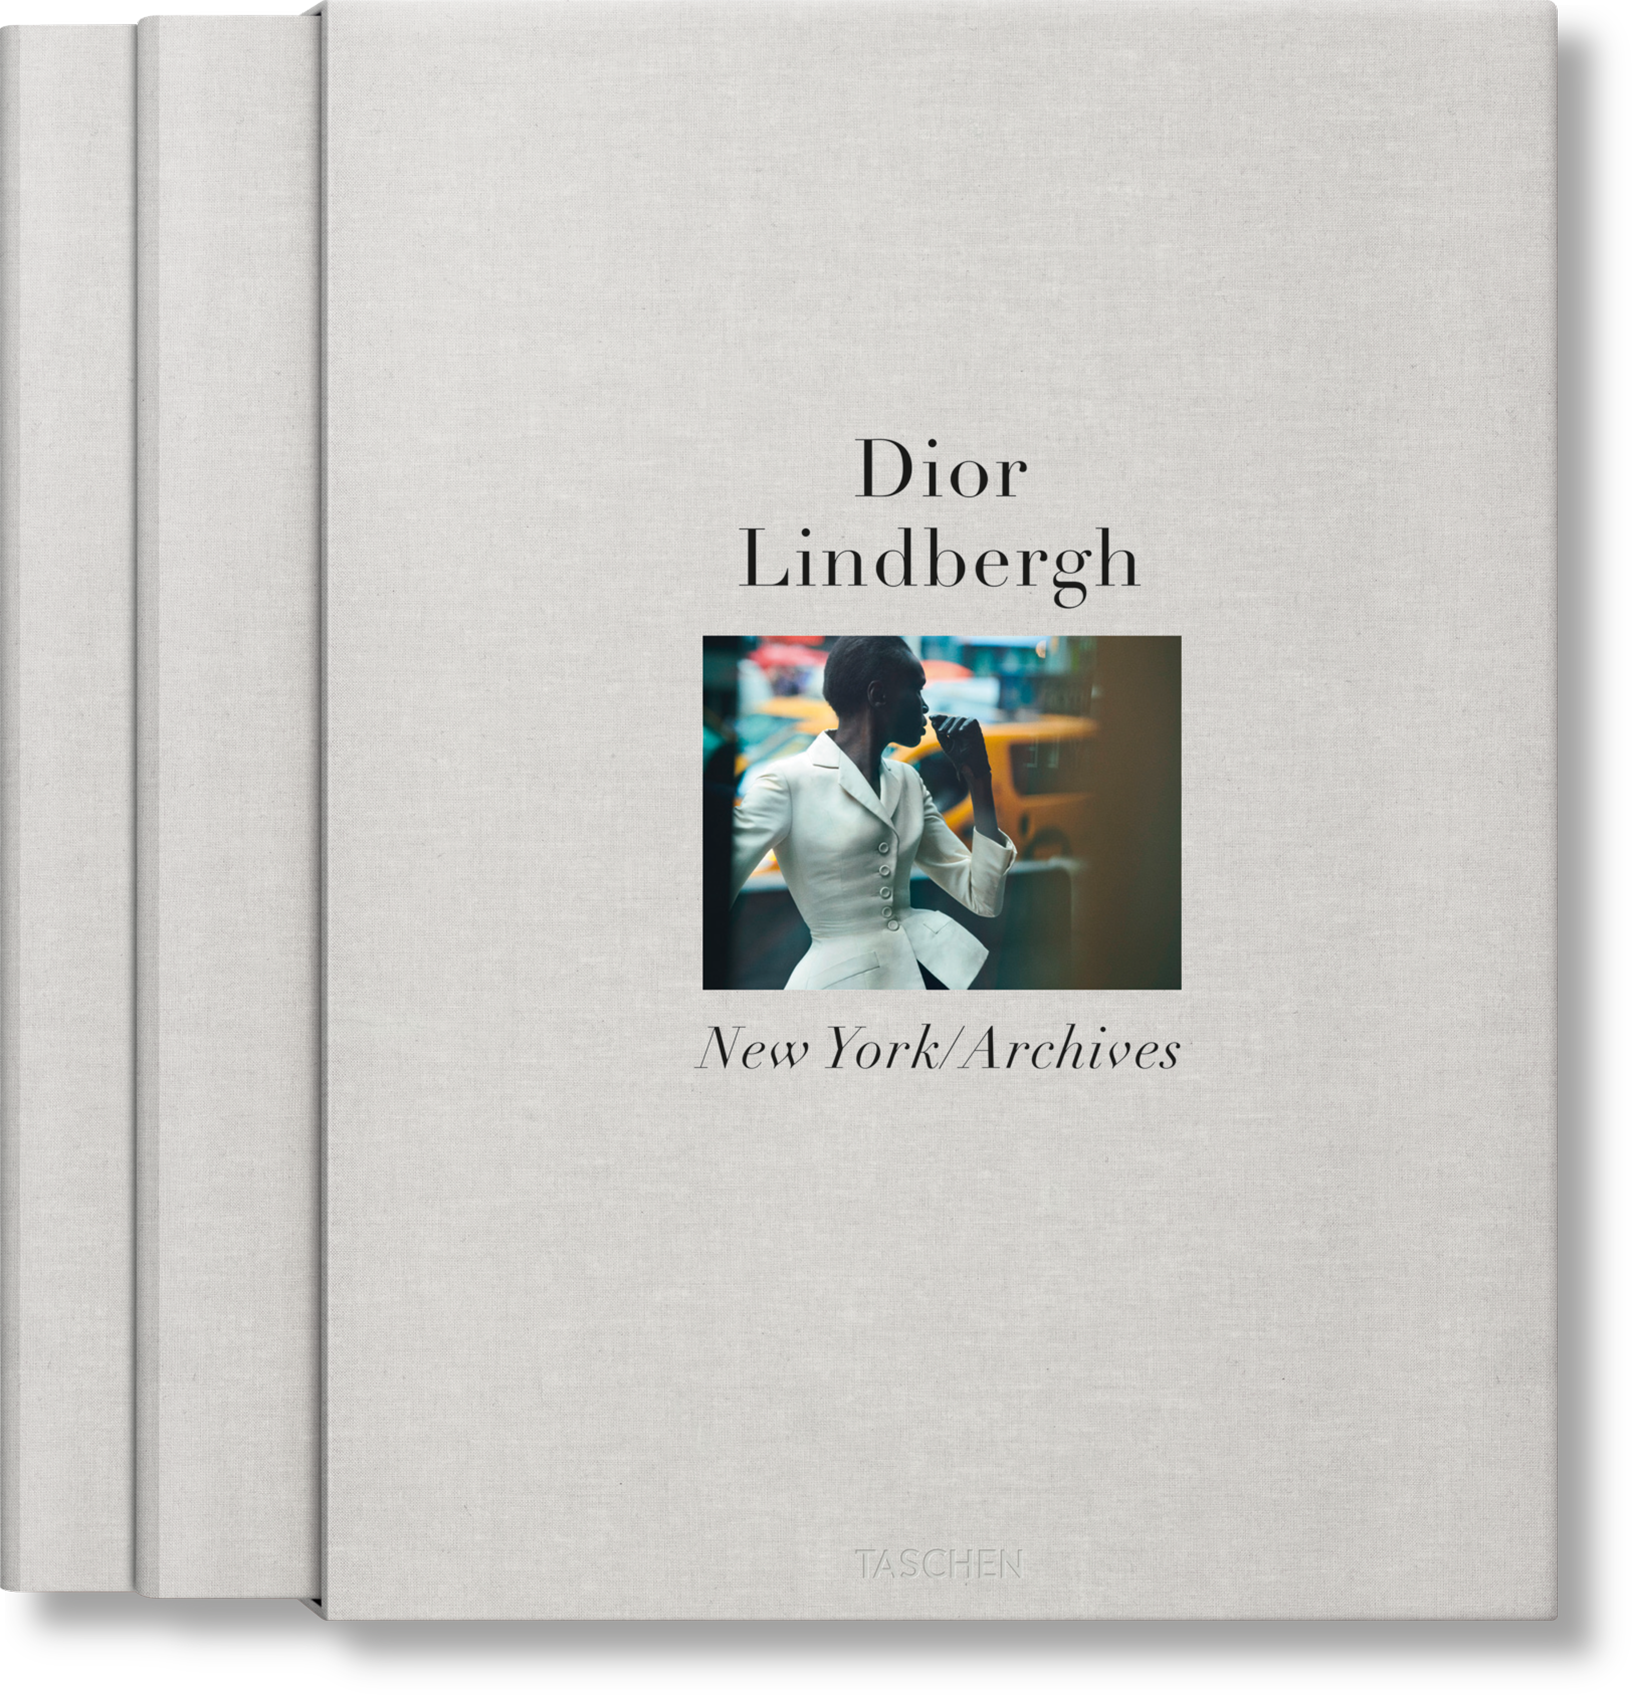 TASCHEN Peter Lindbergh. Dior